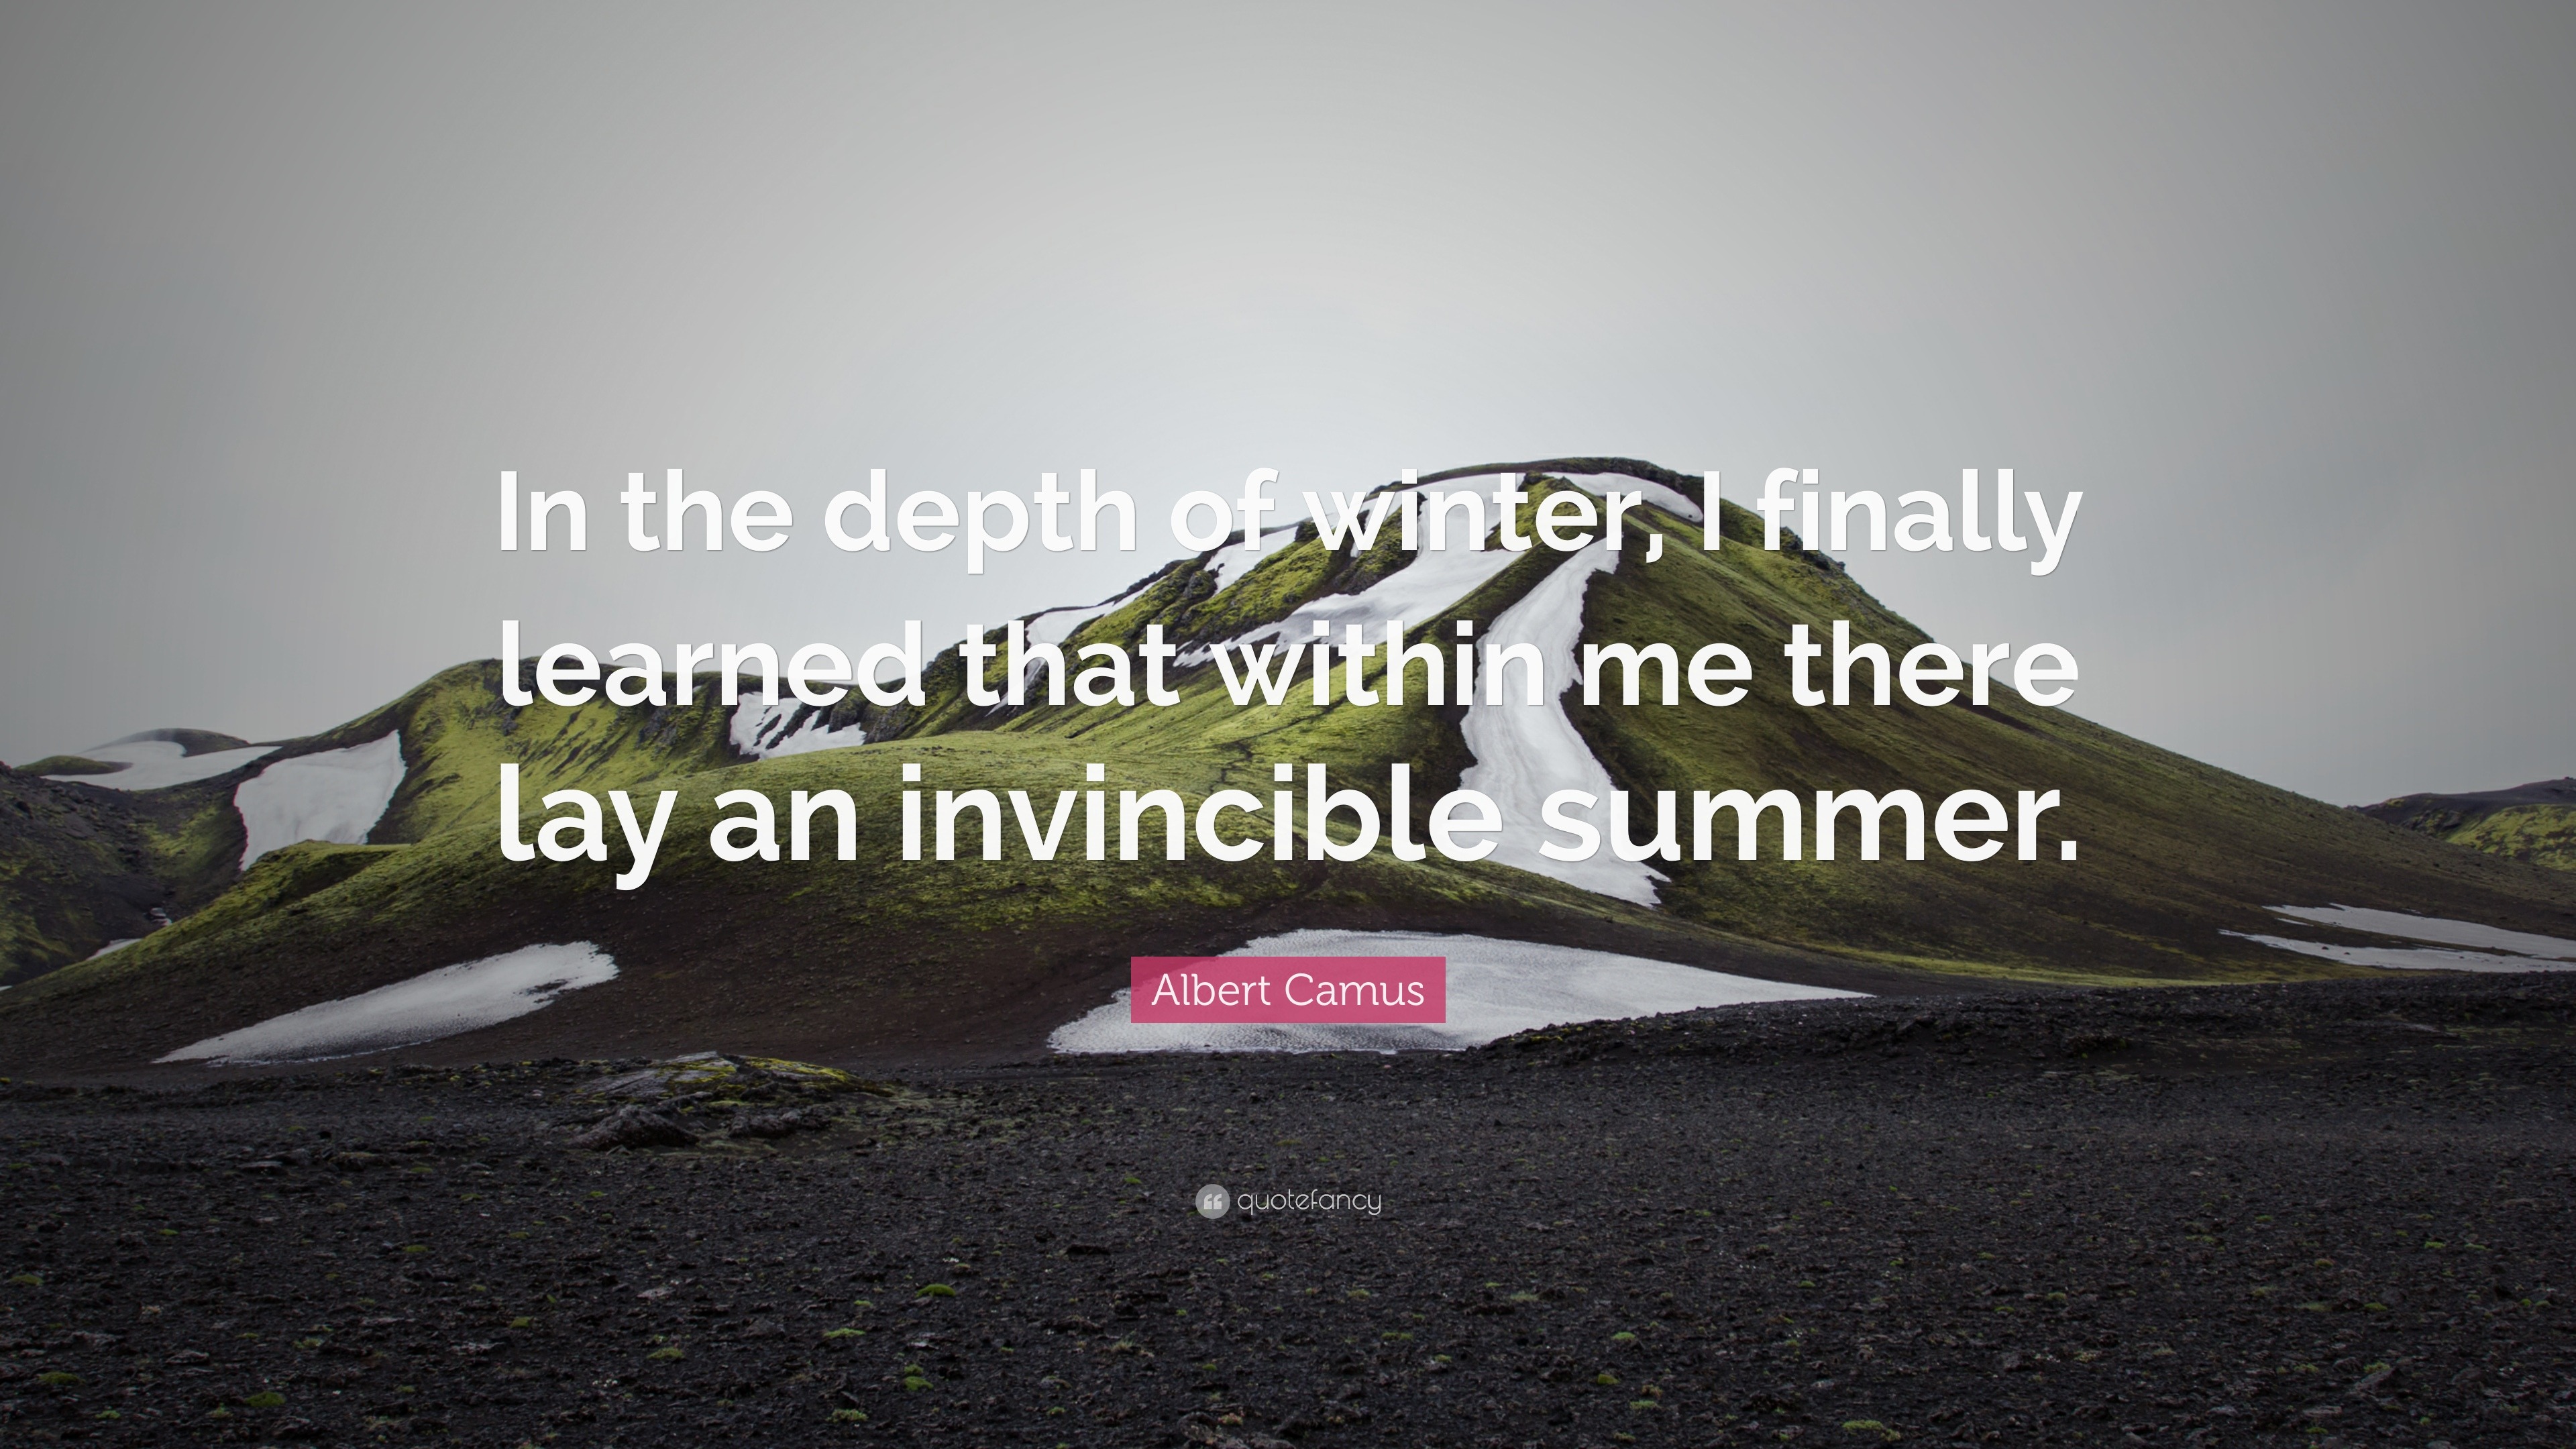 define invincible summer torrent